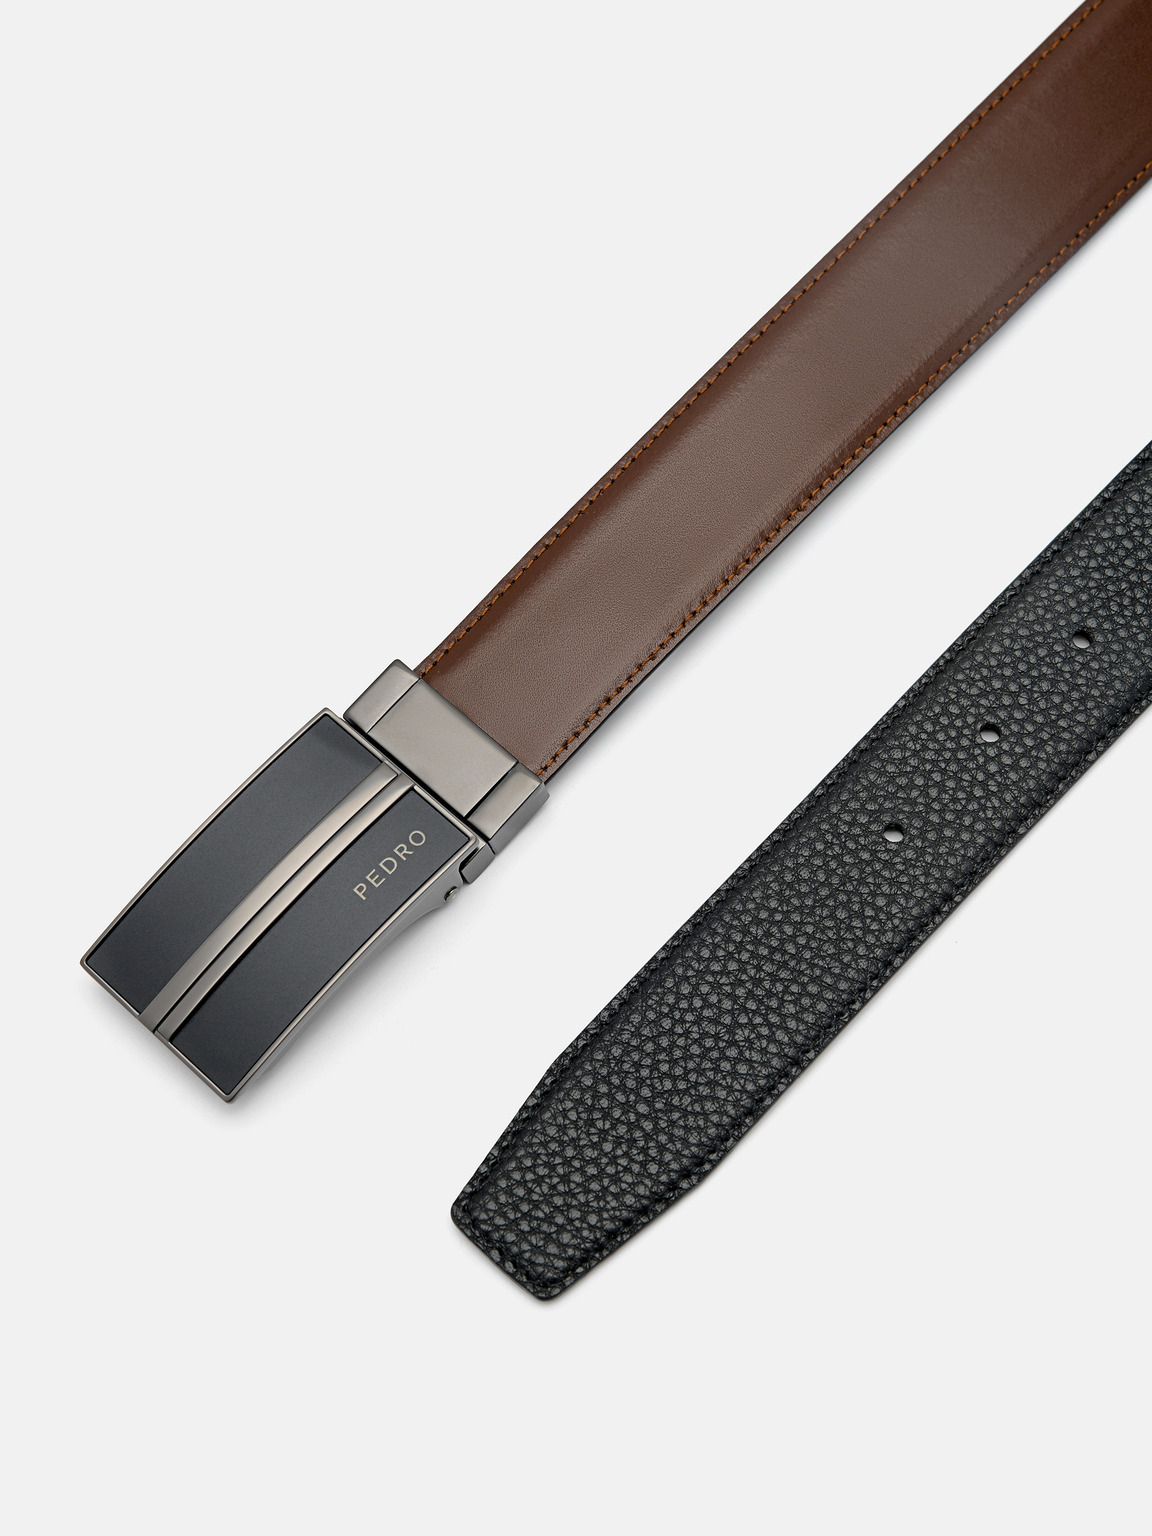 Leather Reversible Tang Belt, Black